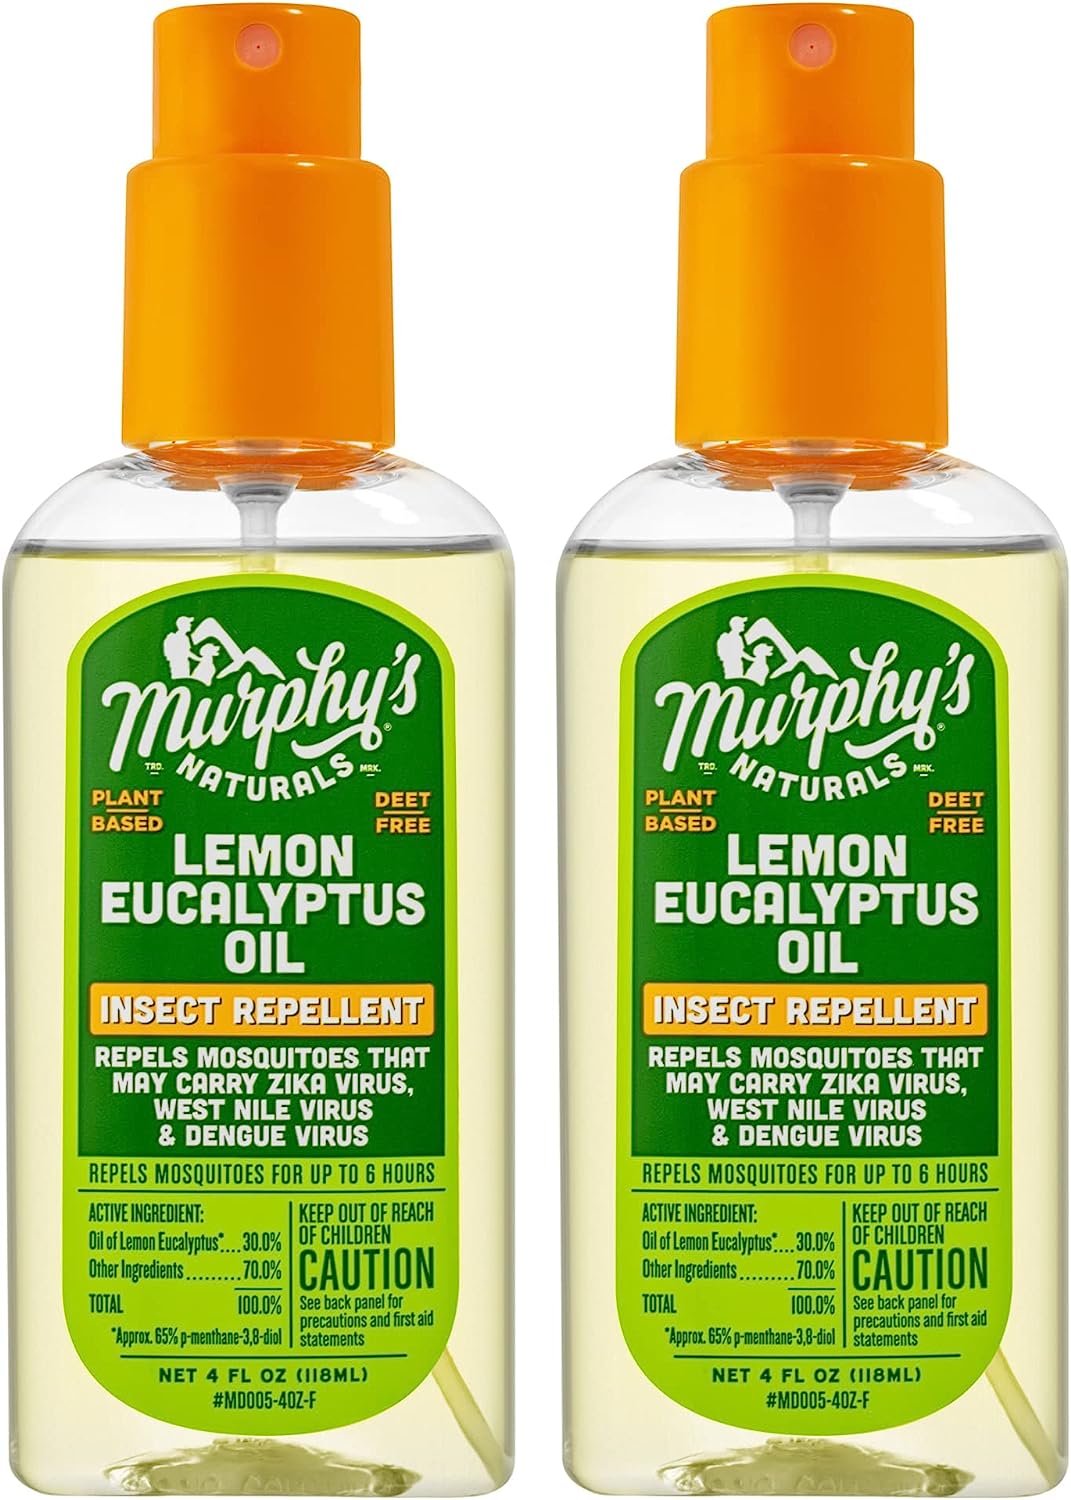 Murphy's Naturals Lemon Eucalyptus Oil Insect [...]